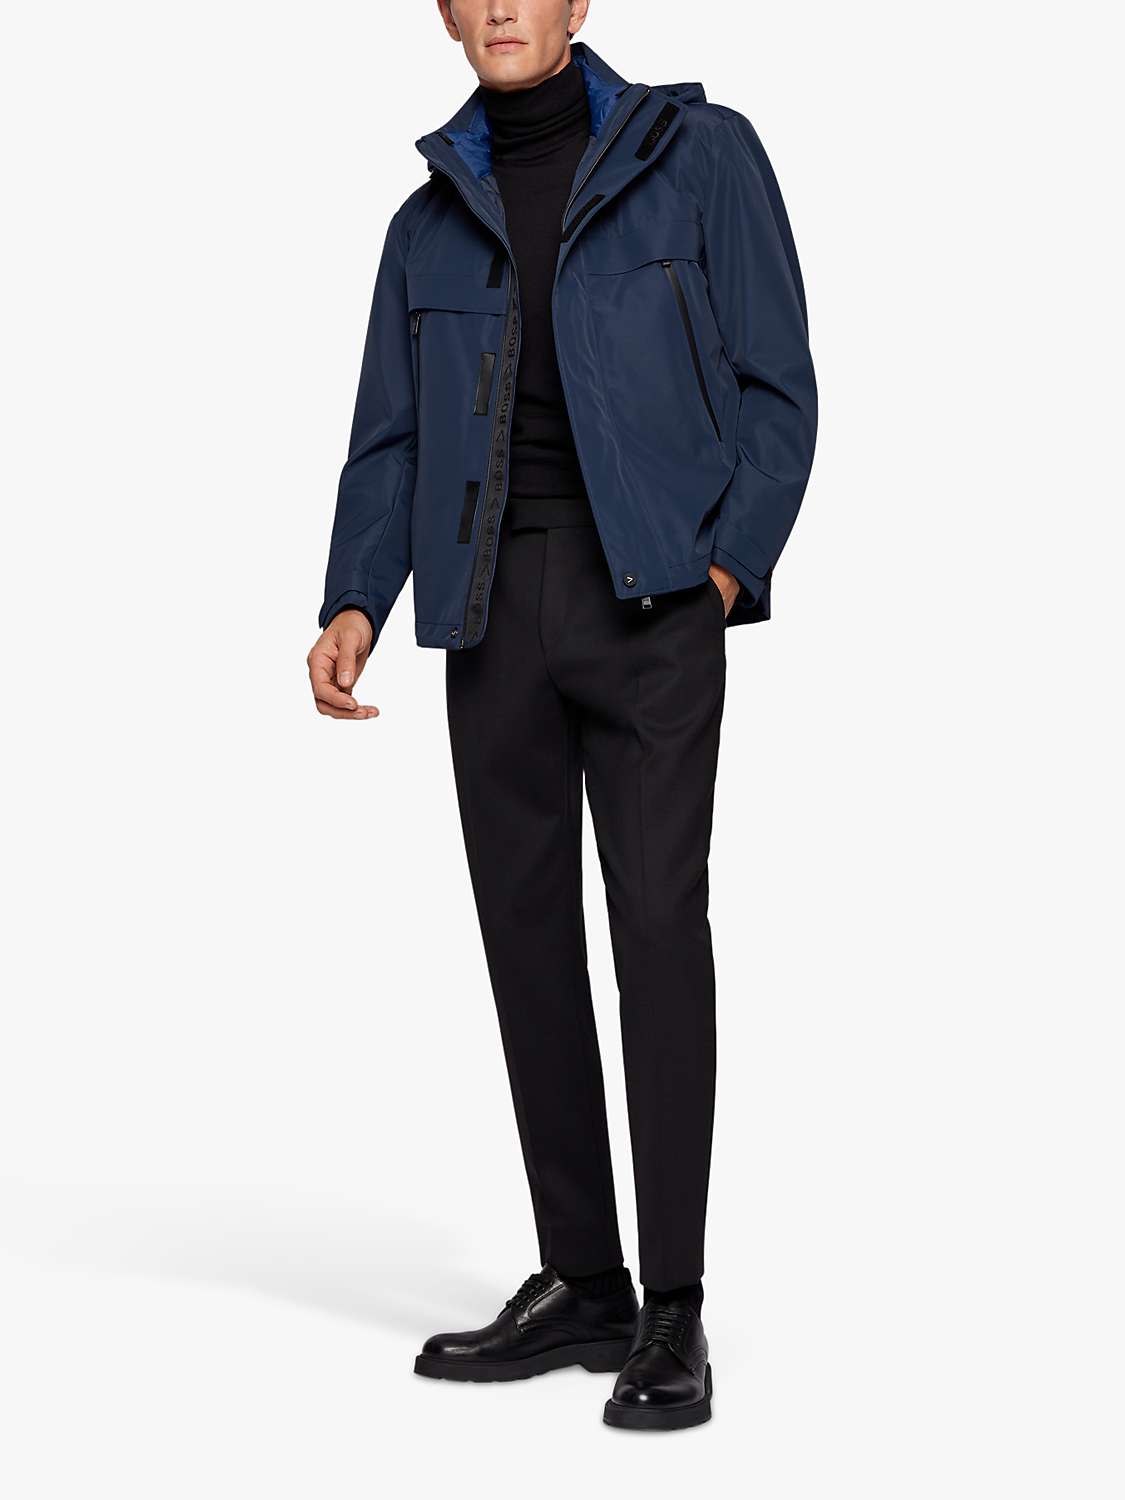 BOSS Carsteno 3-in-1 Softshell Jacket, Dark Blue at John Lewis & Partners